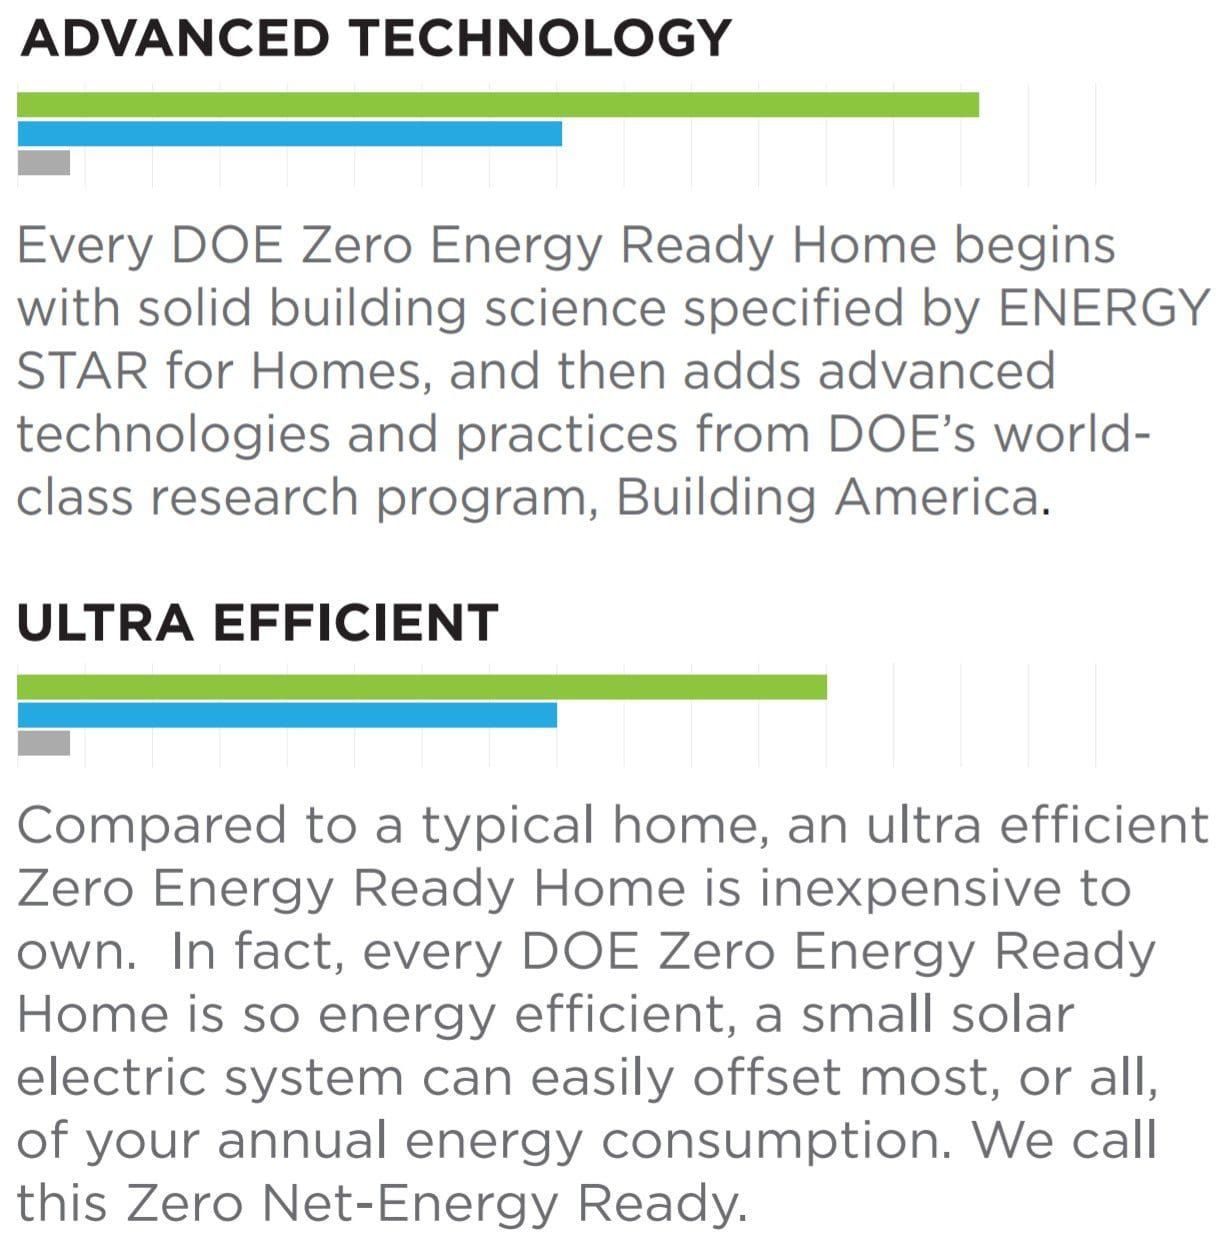 DOE ZERH Advanced Technology